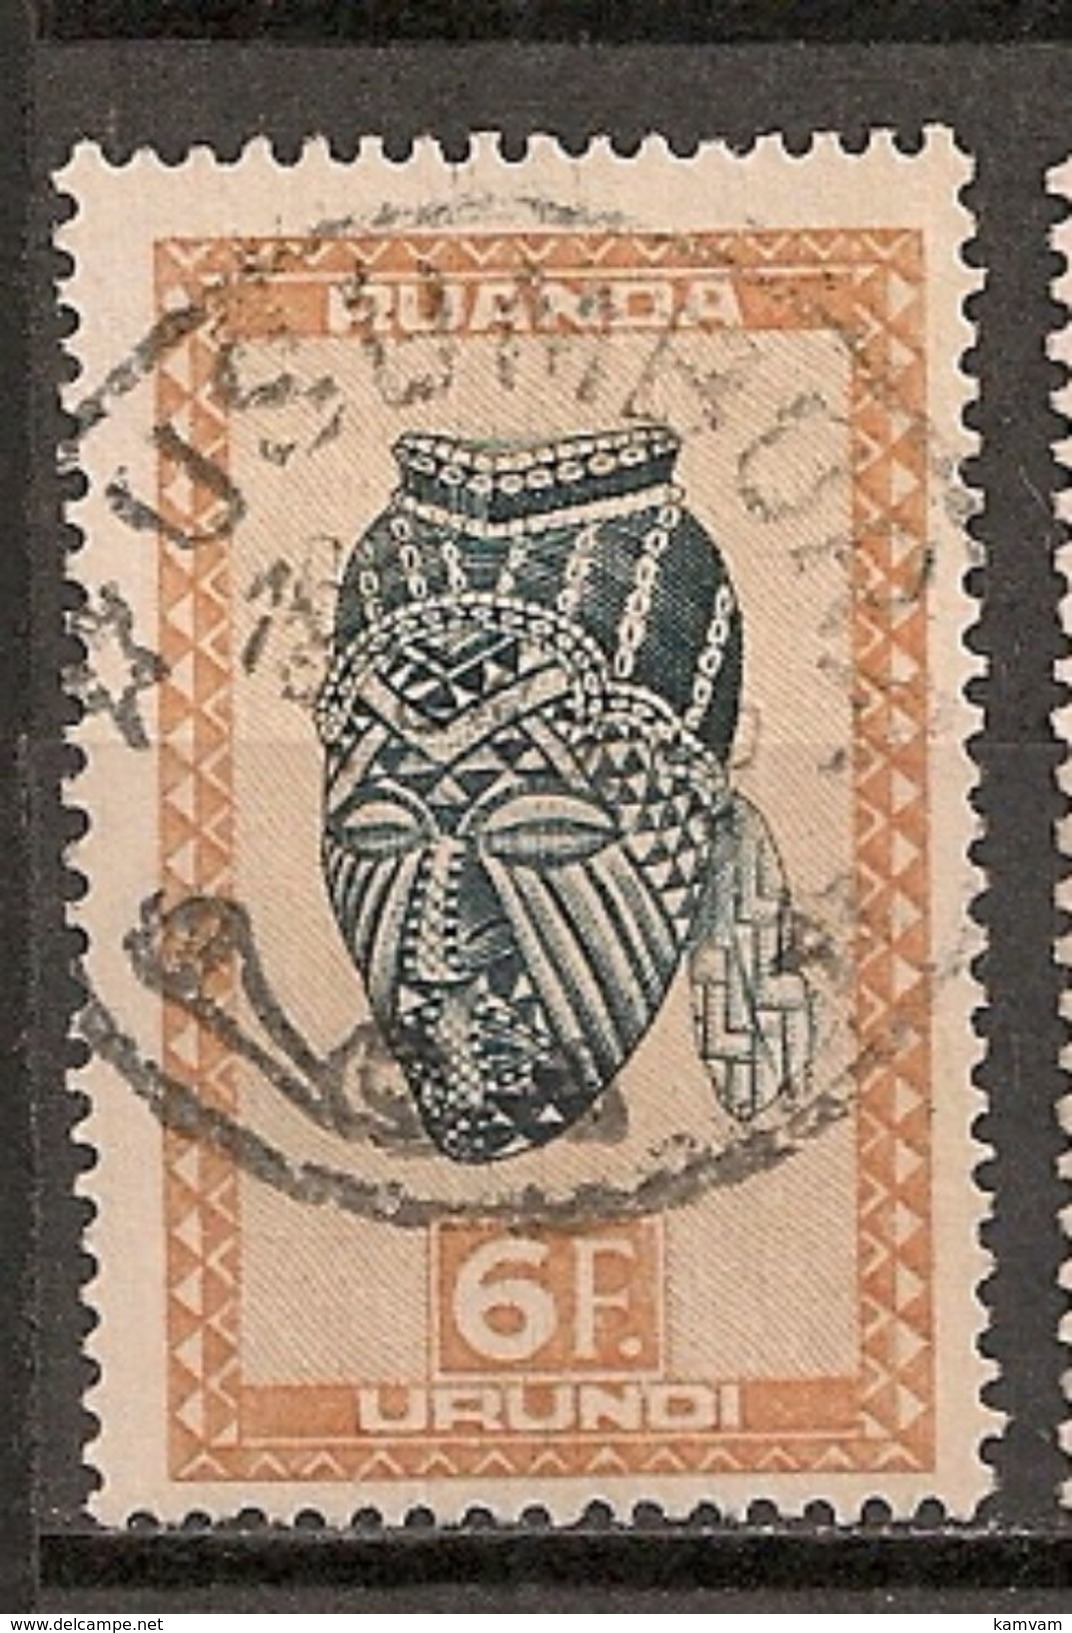 CONGO RUANDA URUNDI 168 USUMBURA - Used Stamps